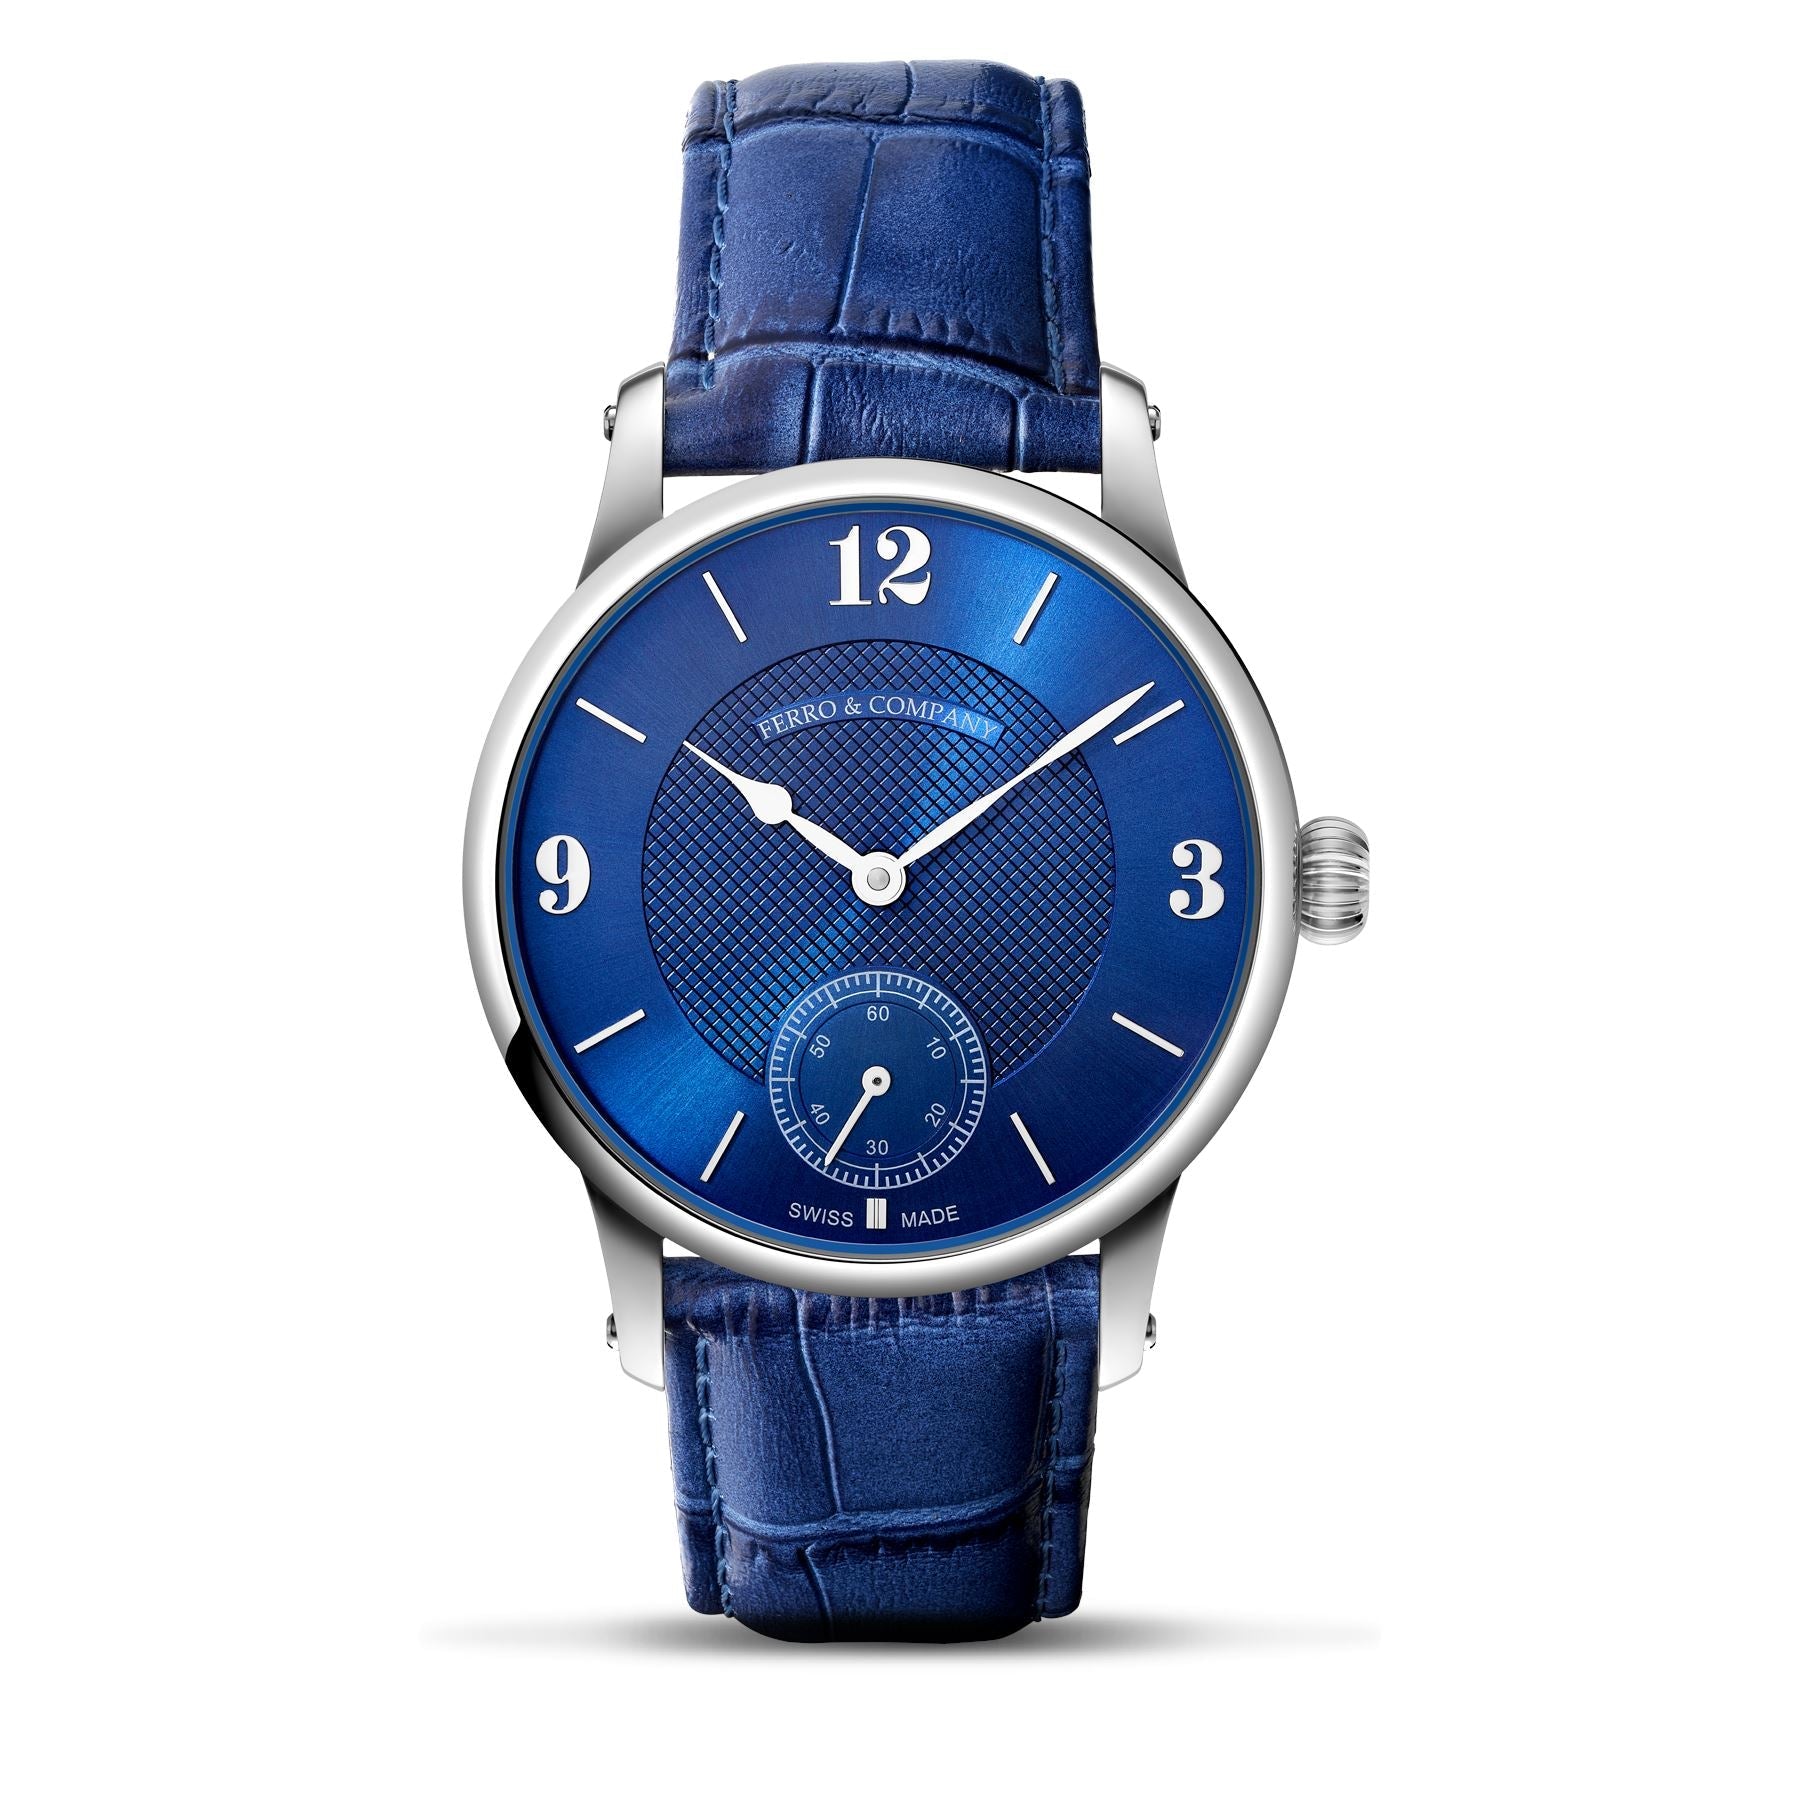 TRADITUM VINTAGE STYLE DRESS WATCH BLUE - Ferro &amp; Company Watches